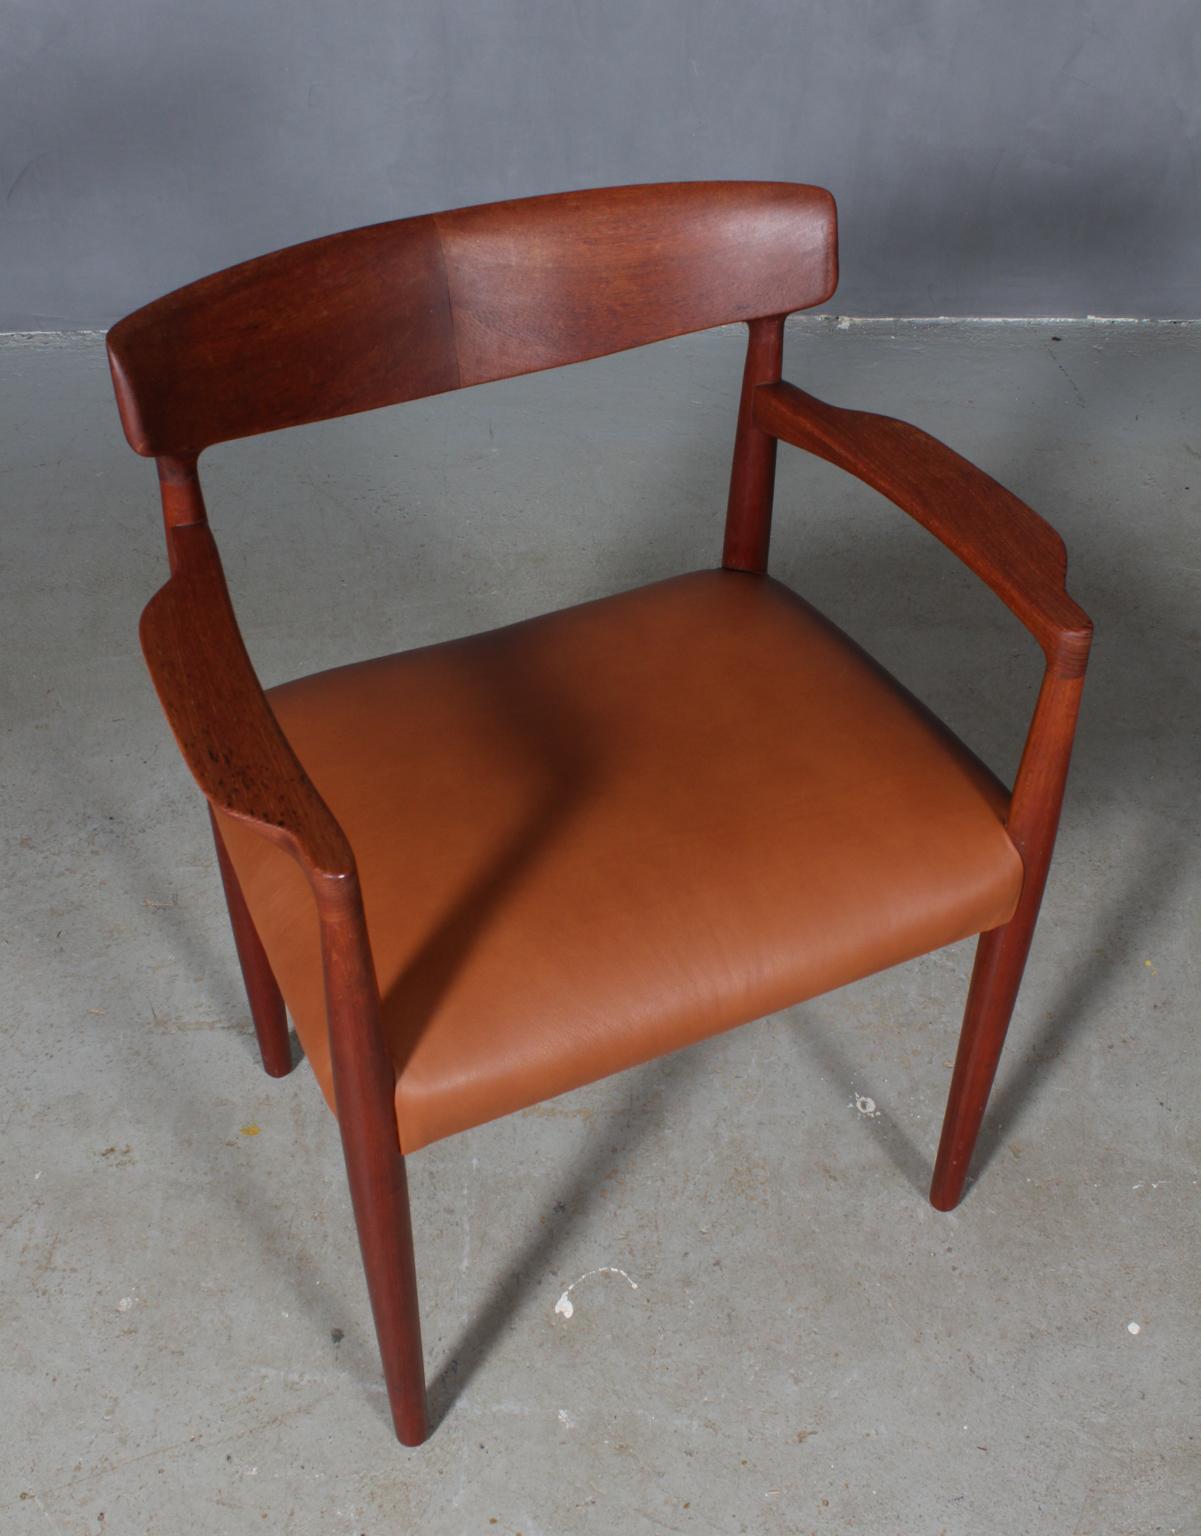 Knud Færch armchair in teak.

New upholstered with aniline leather.

Made by Slagelse Møbelværk.